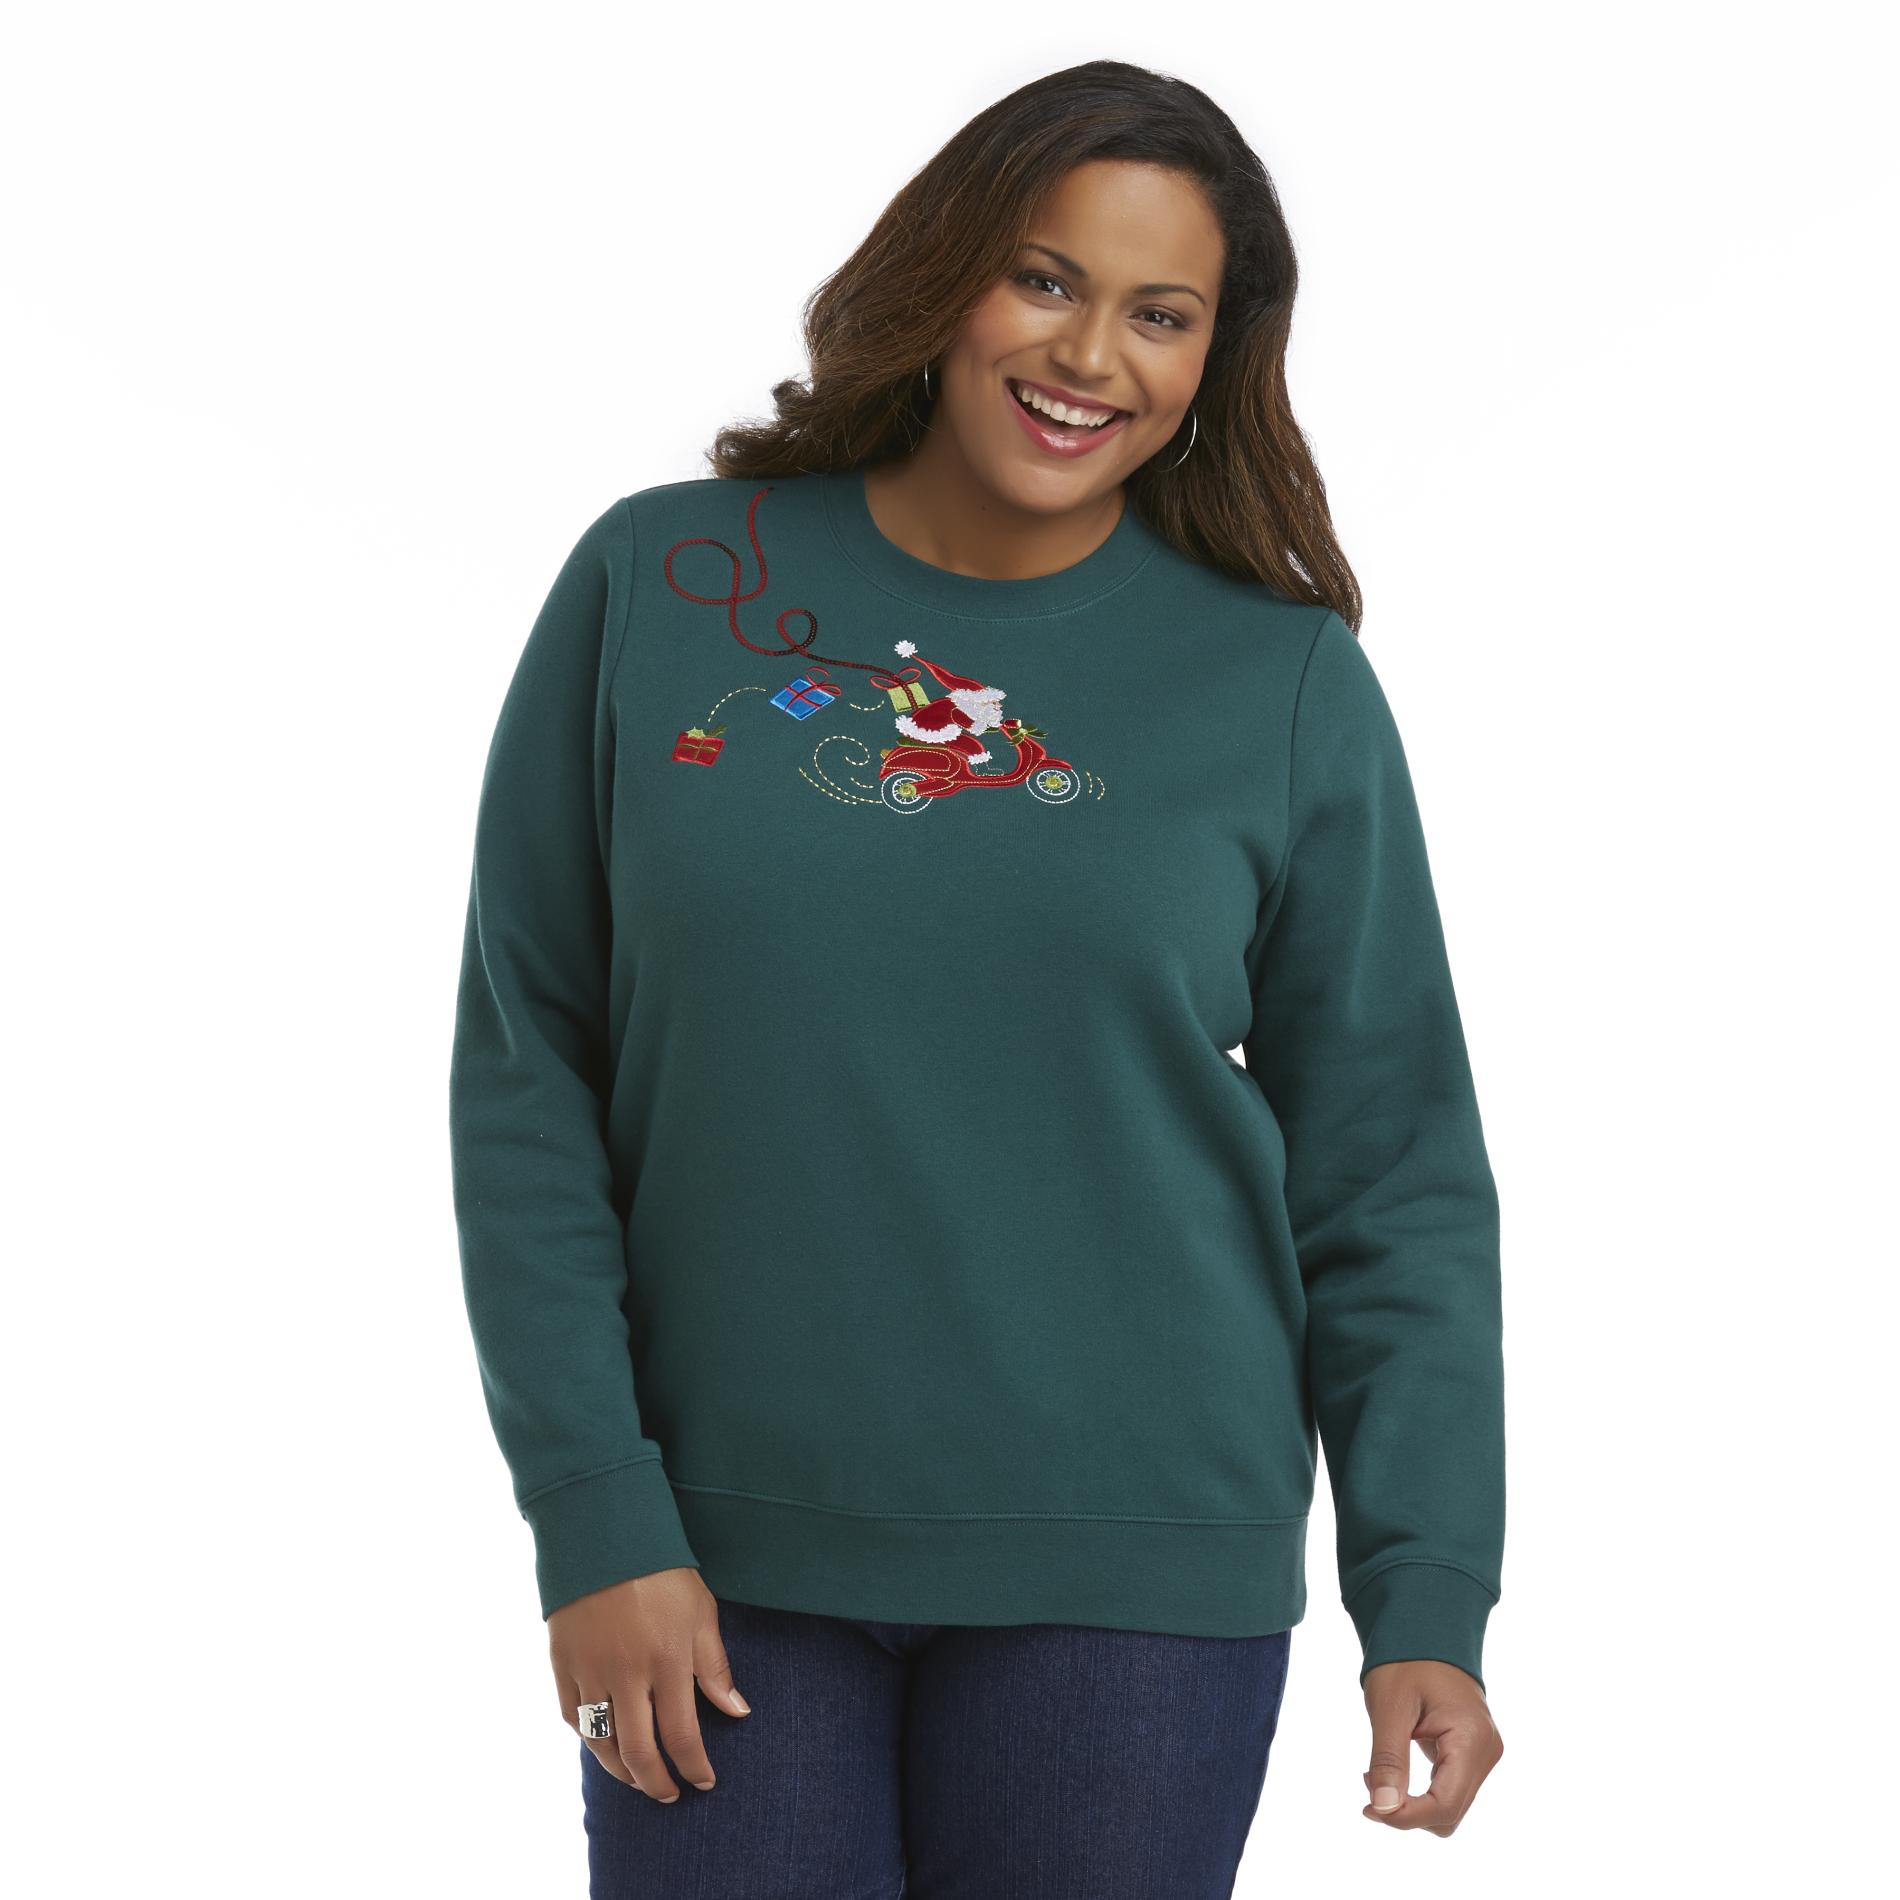 Holiday Editions Women's Plus Embellished Sweatshirt - Santa Claus